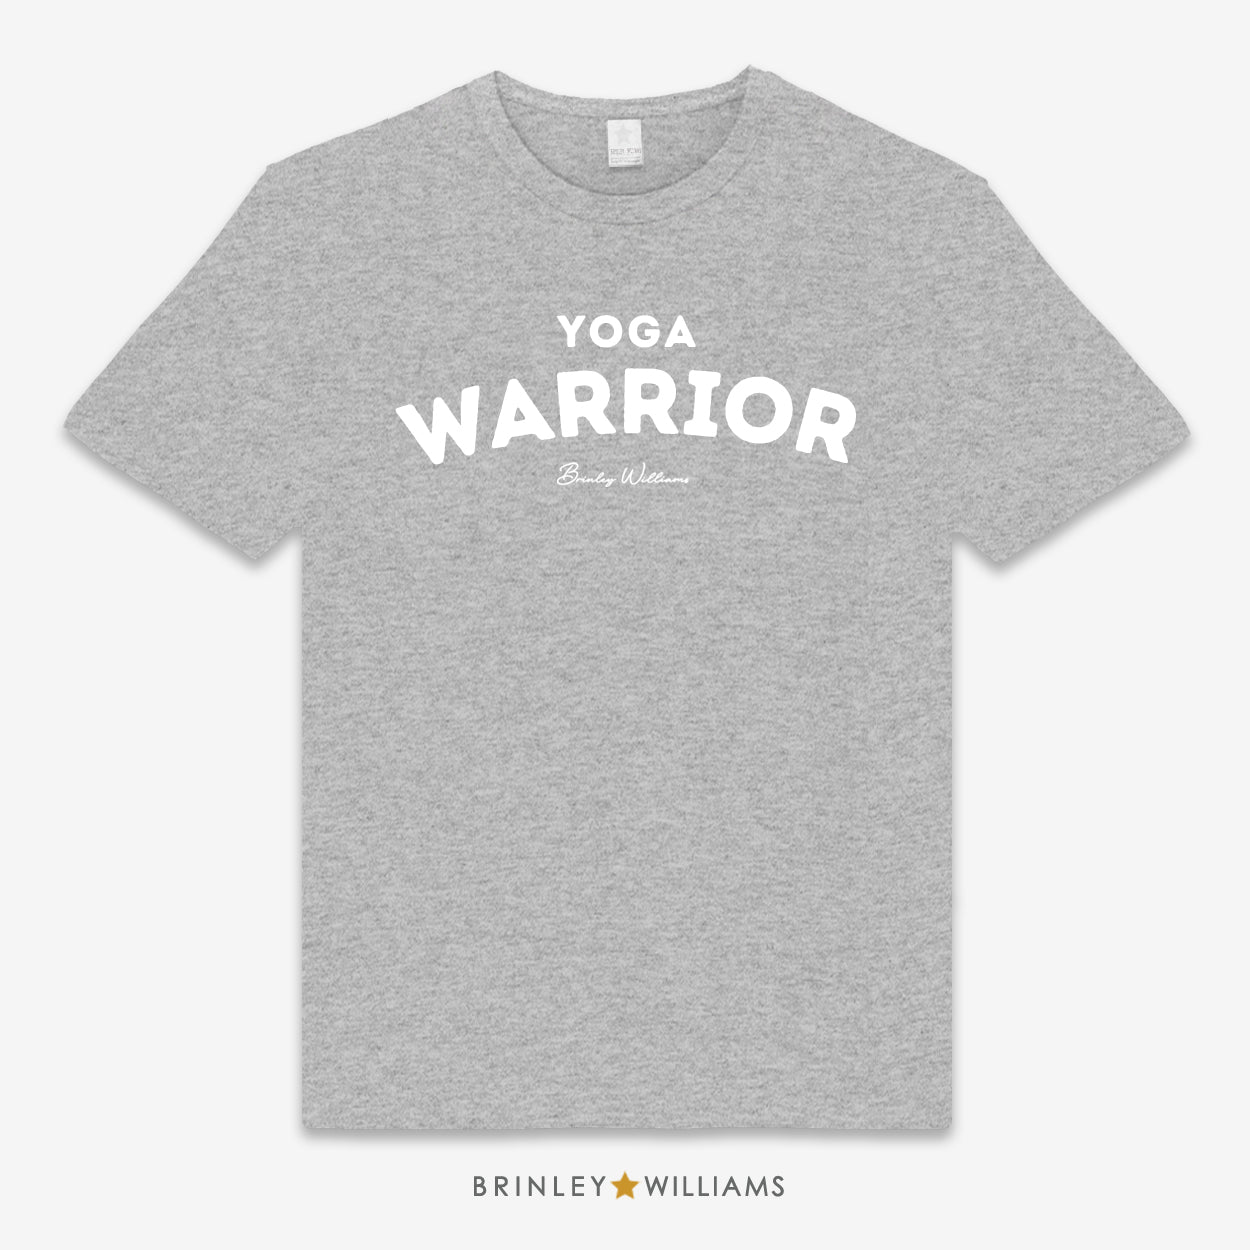 Yoga Varrior Unisex Classic Yoga T-shirt - Heather Grey